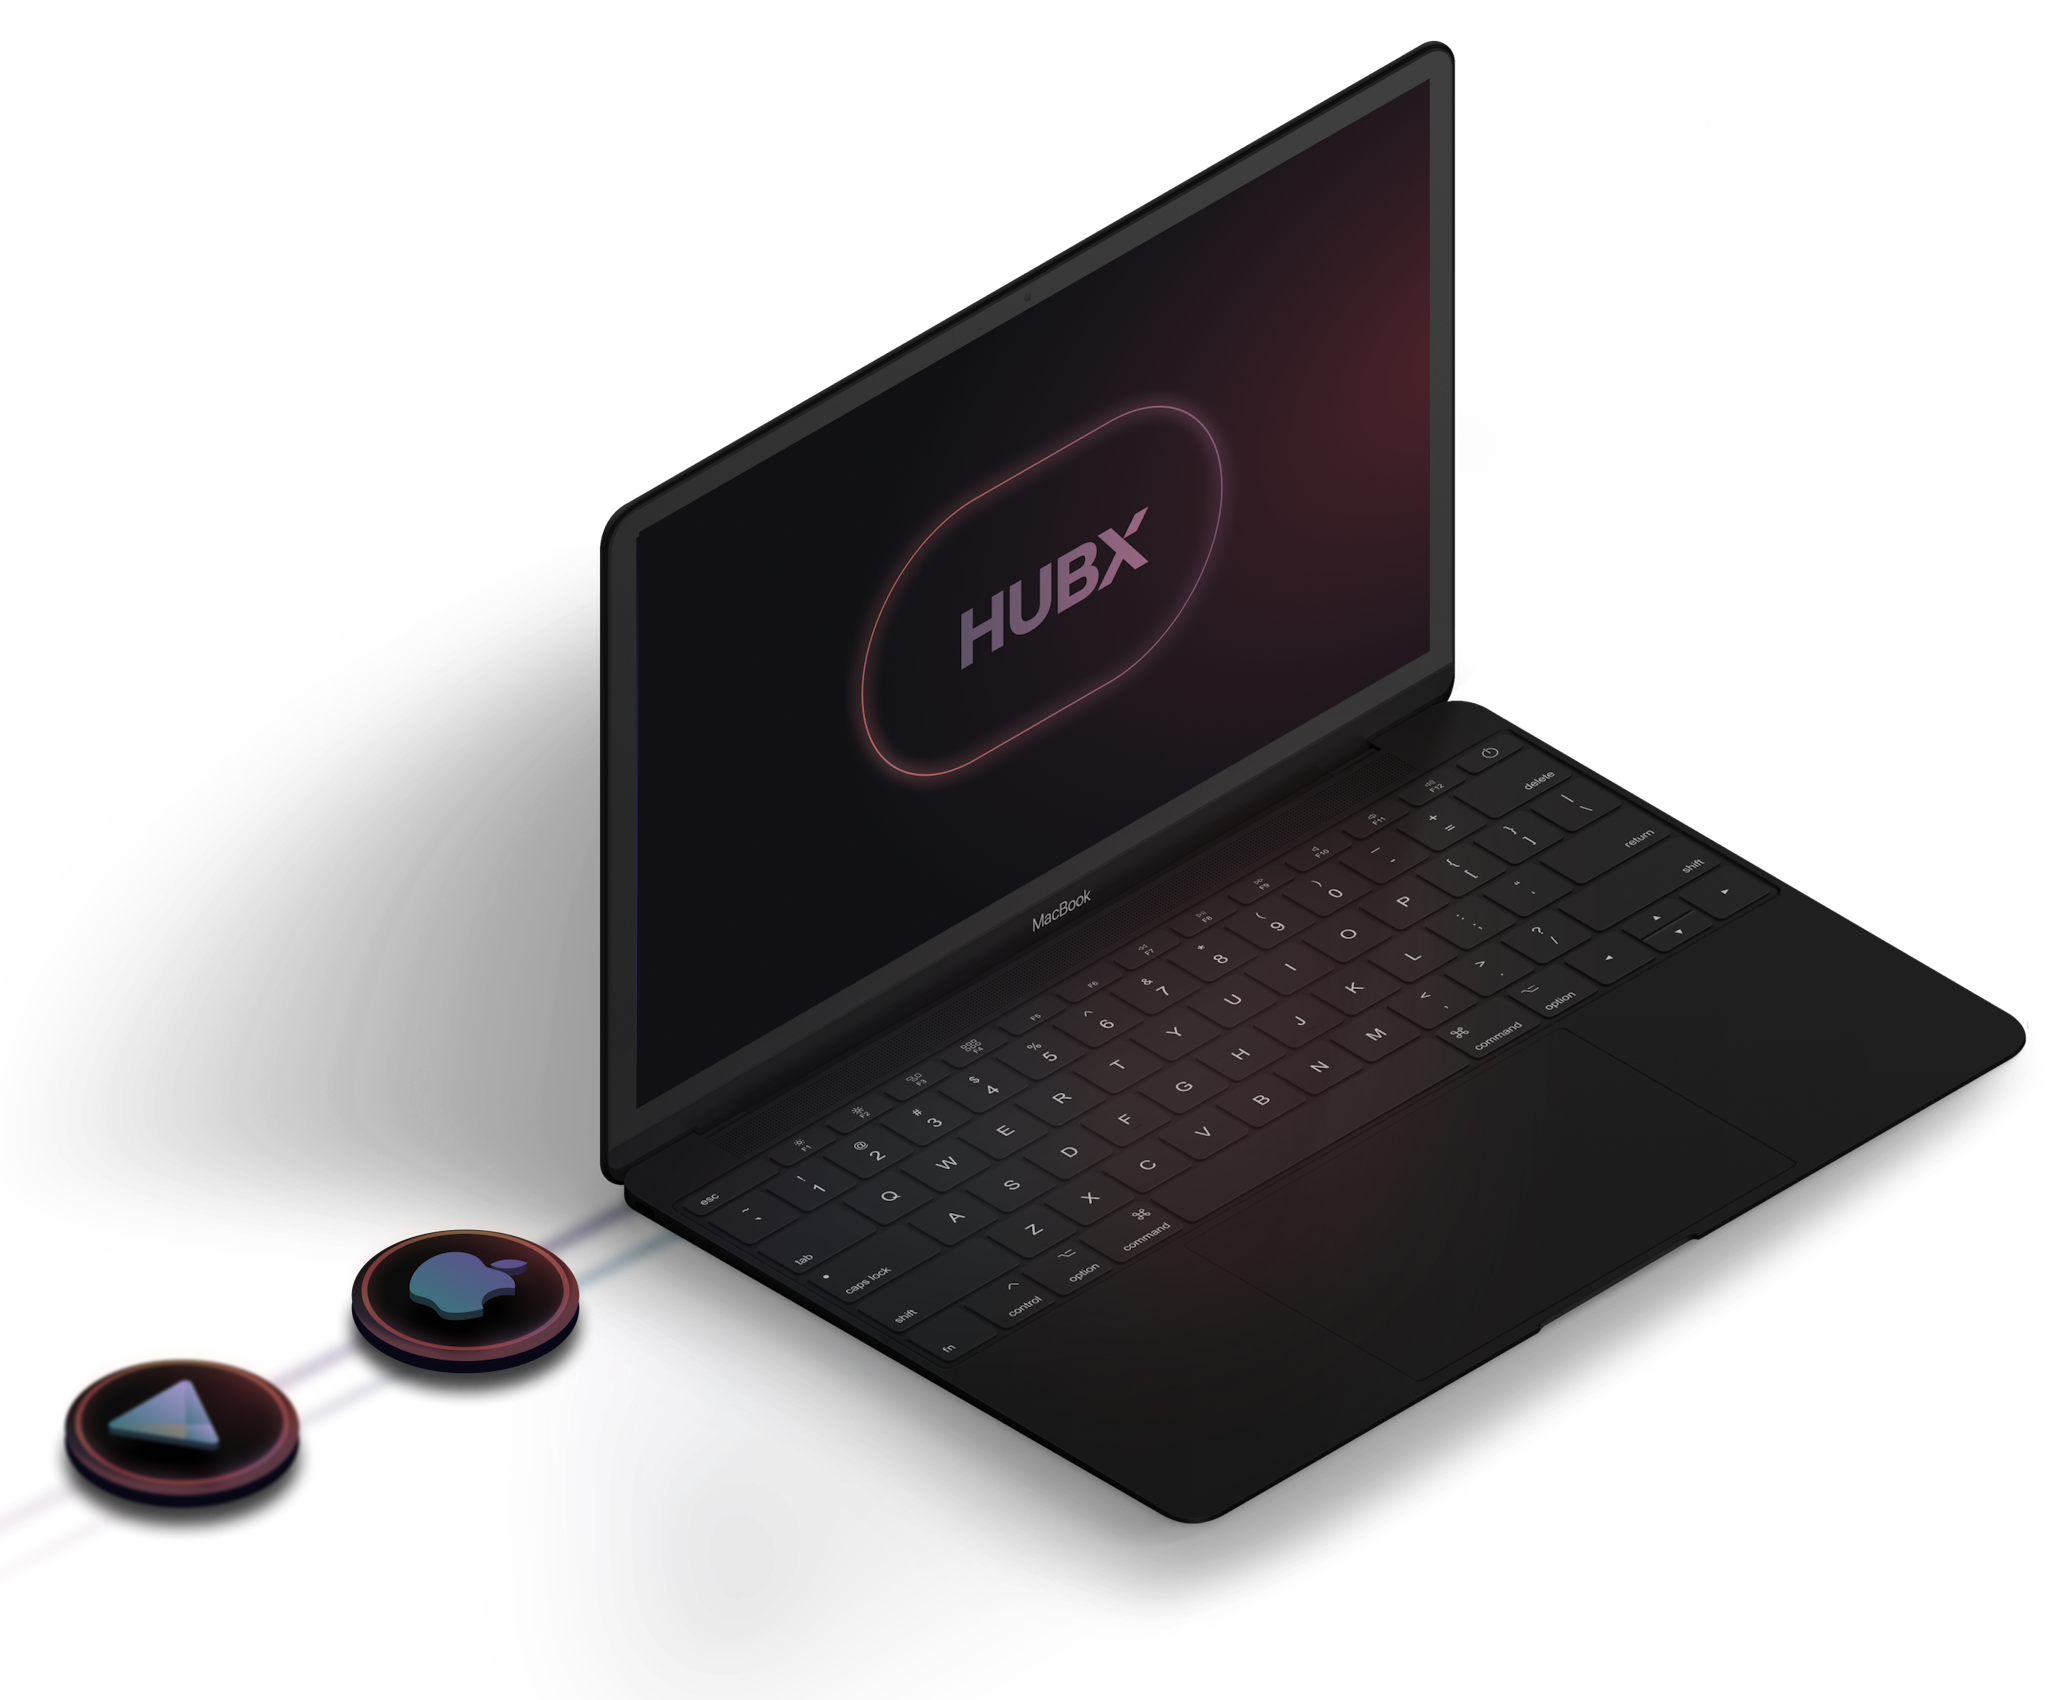 HubX computer producing mobile application